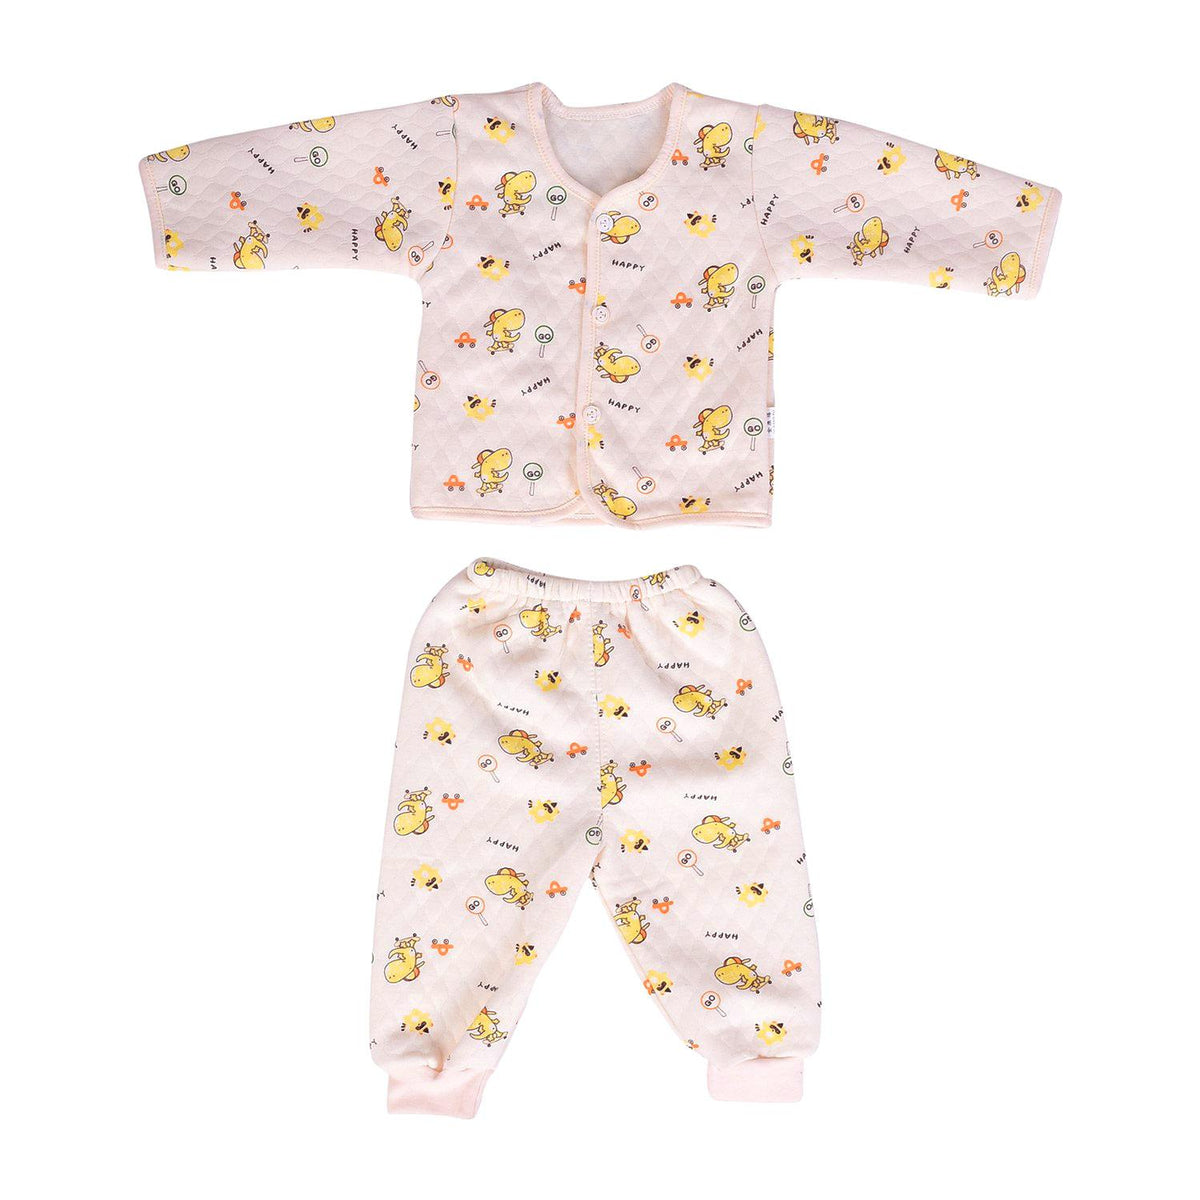 Unisex Baby Cotton Suit-1 Pajama and 1 Shirt- Yellow Fish